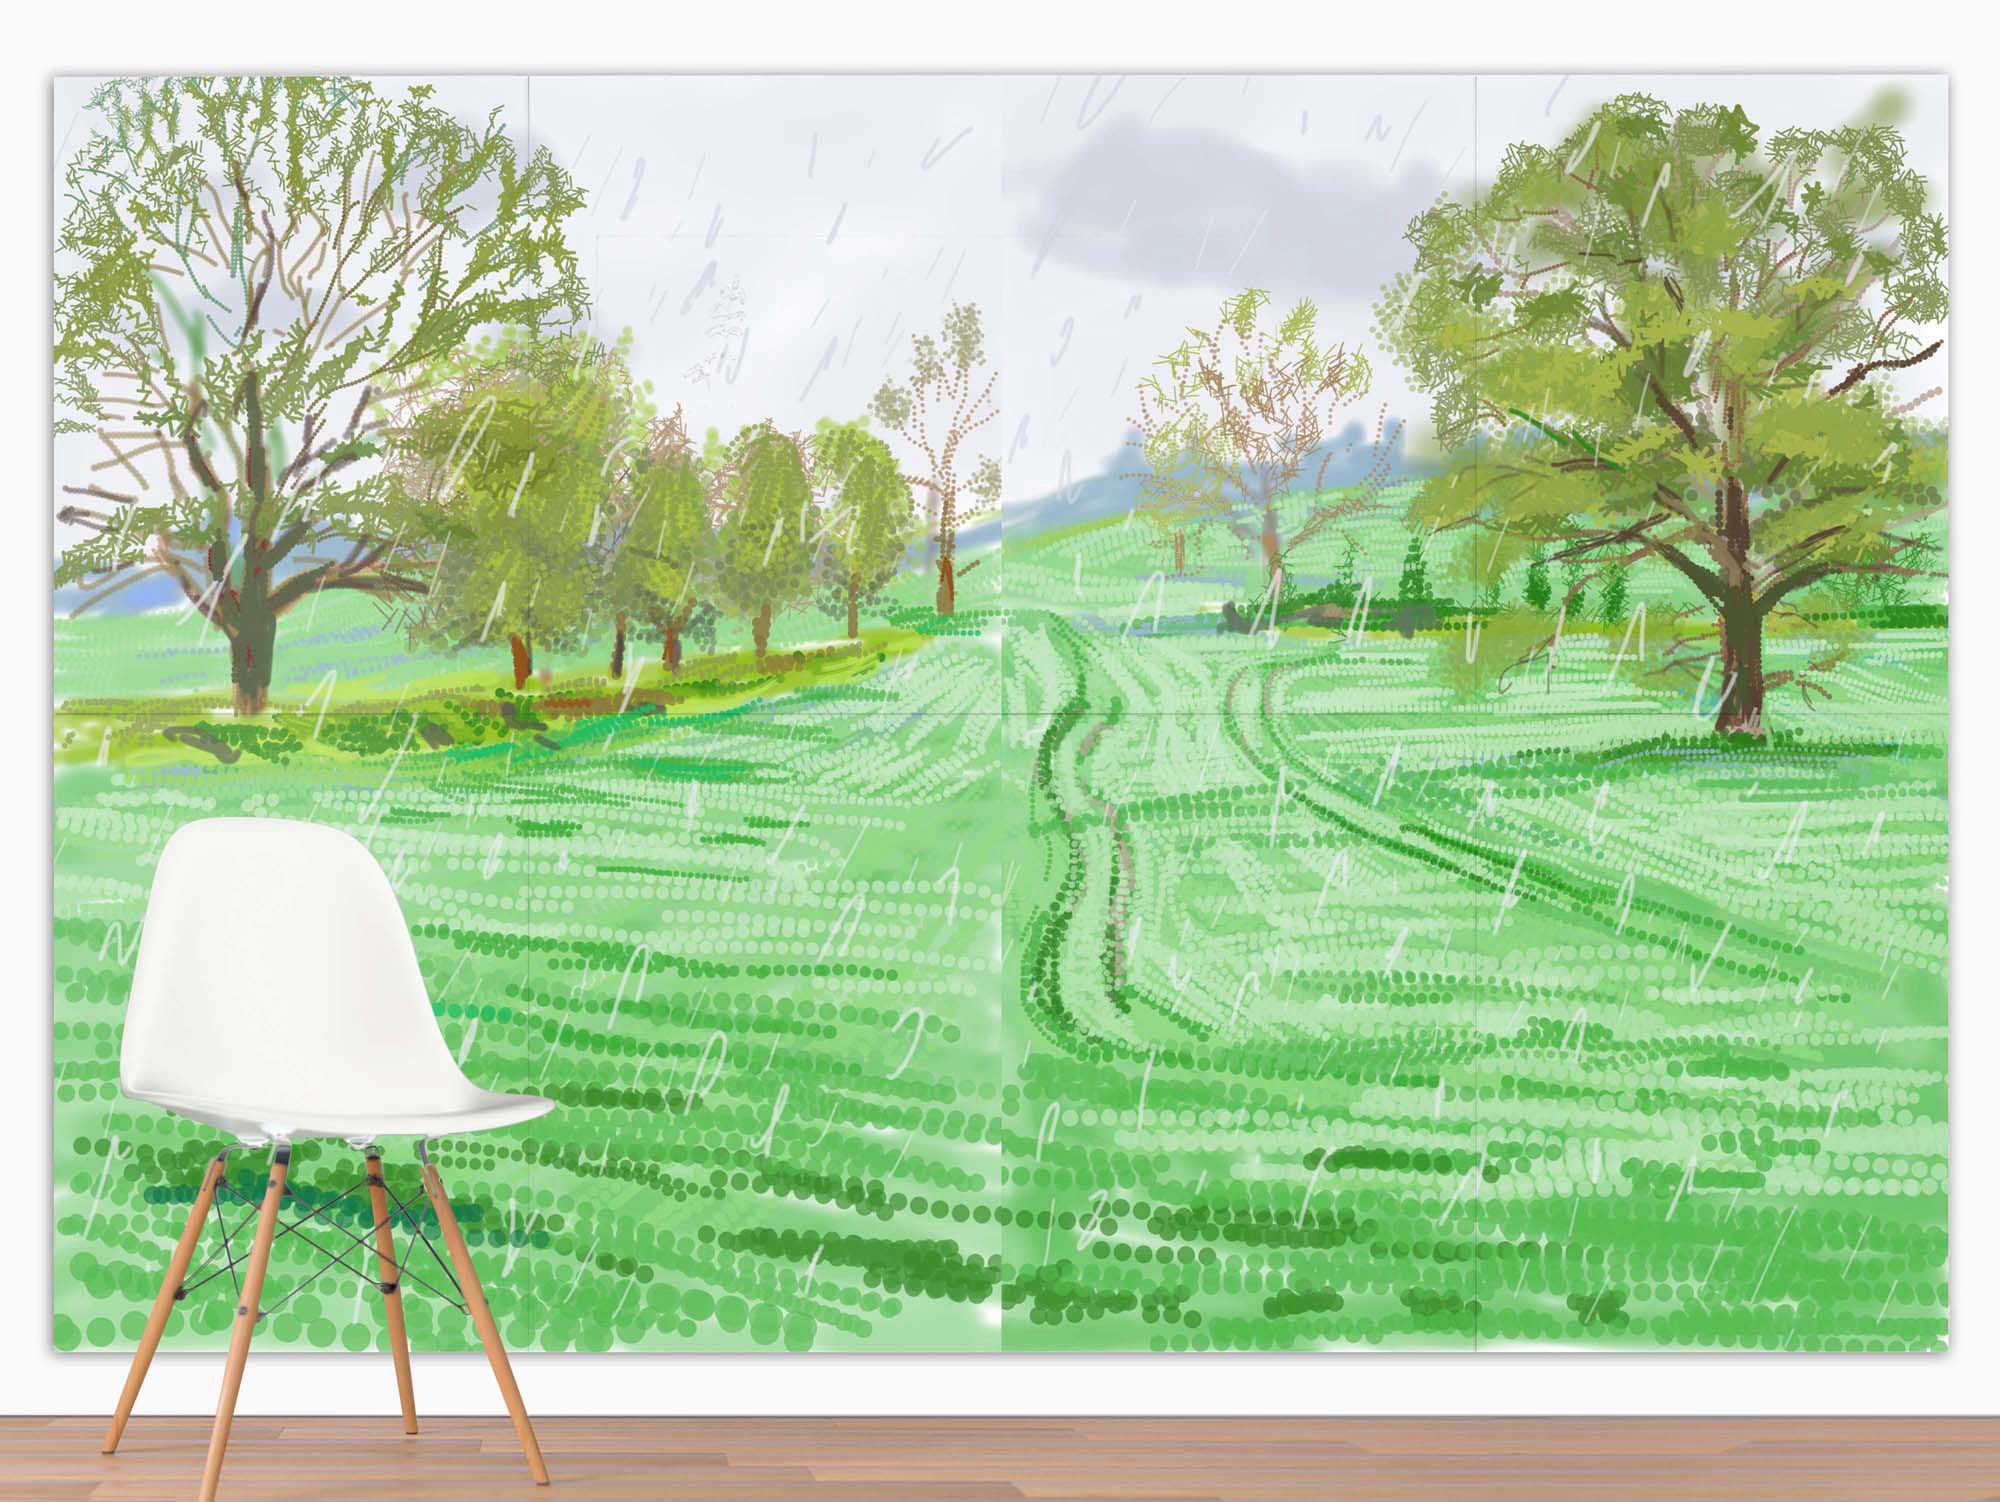 Andy Maitland, iPad artist, iPad drawings made across two iPad canvases, Wotton, Surrey, UK, 2021